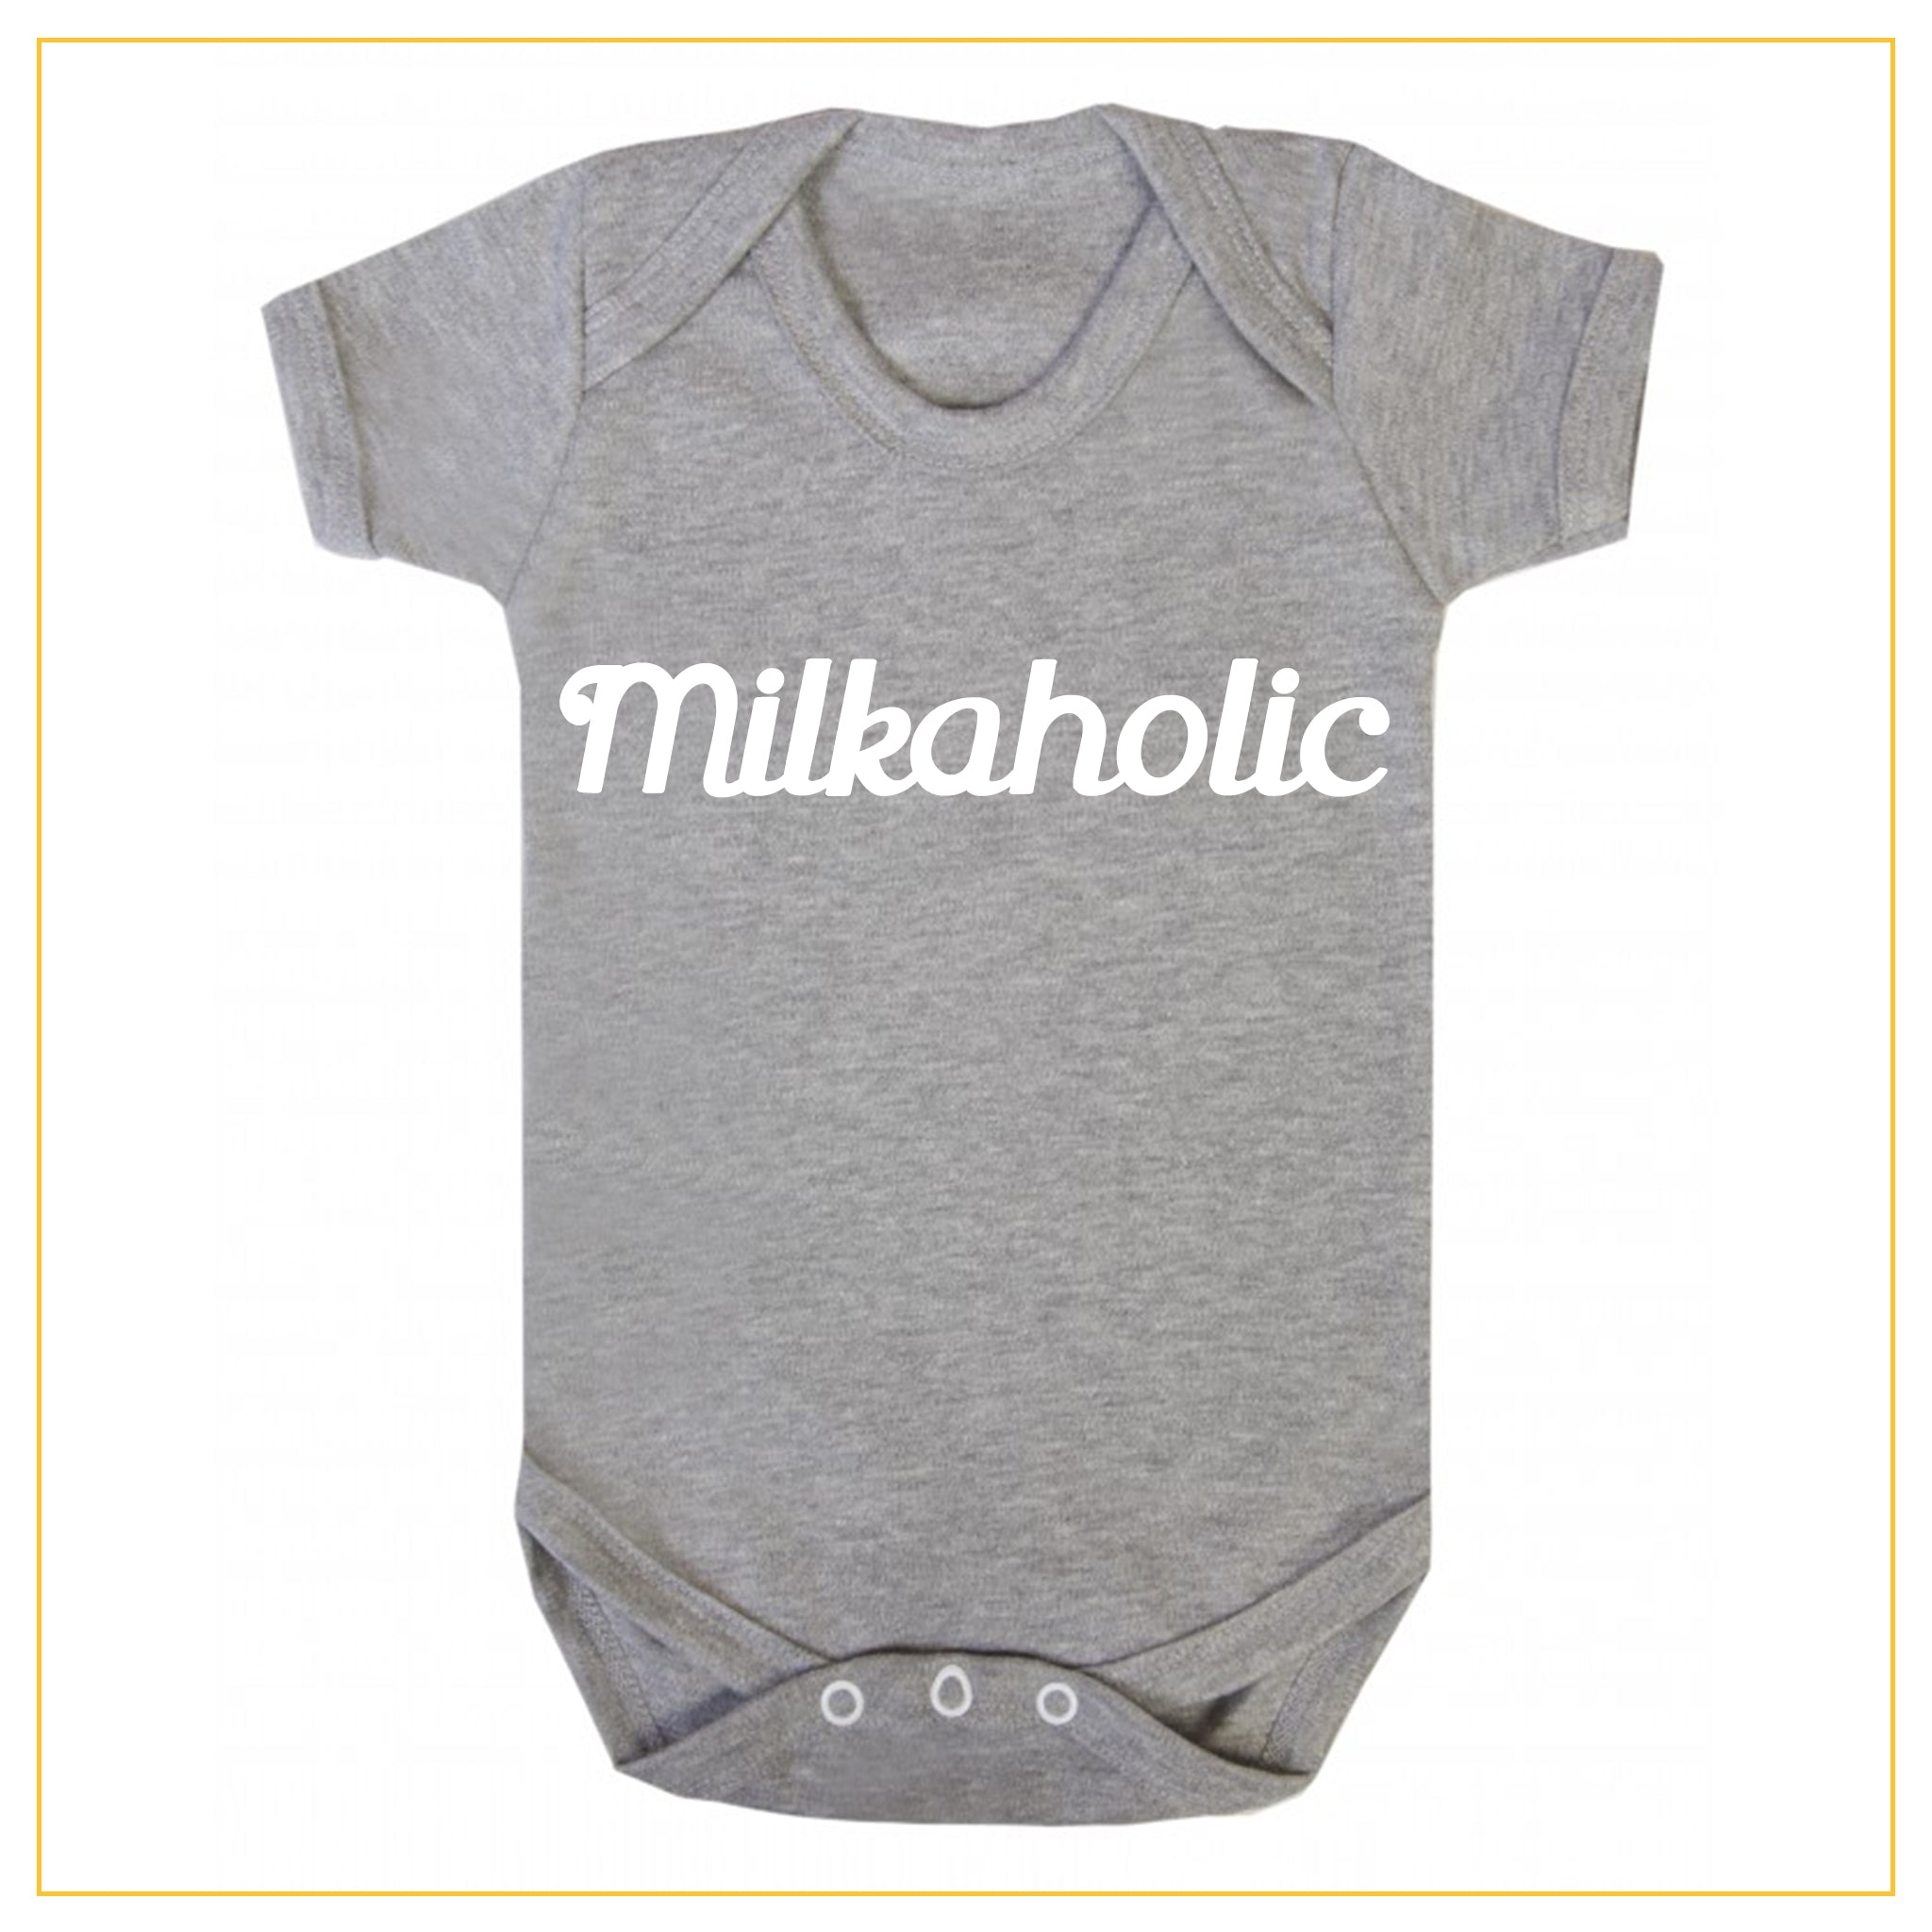 milkaholic novelty baby onesie in grey